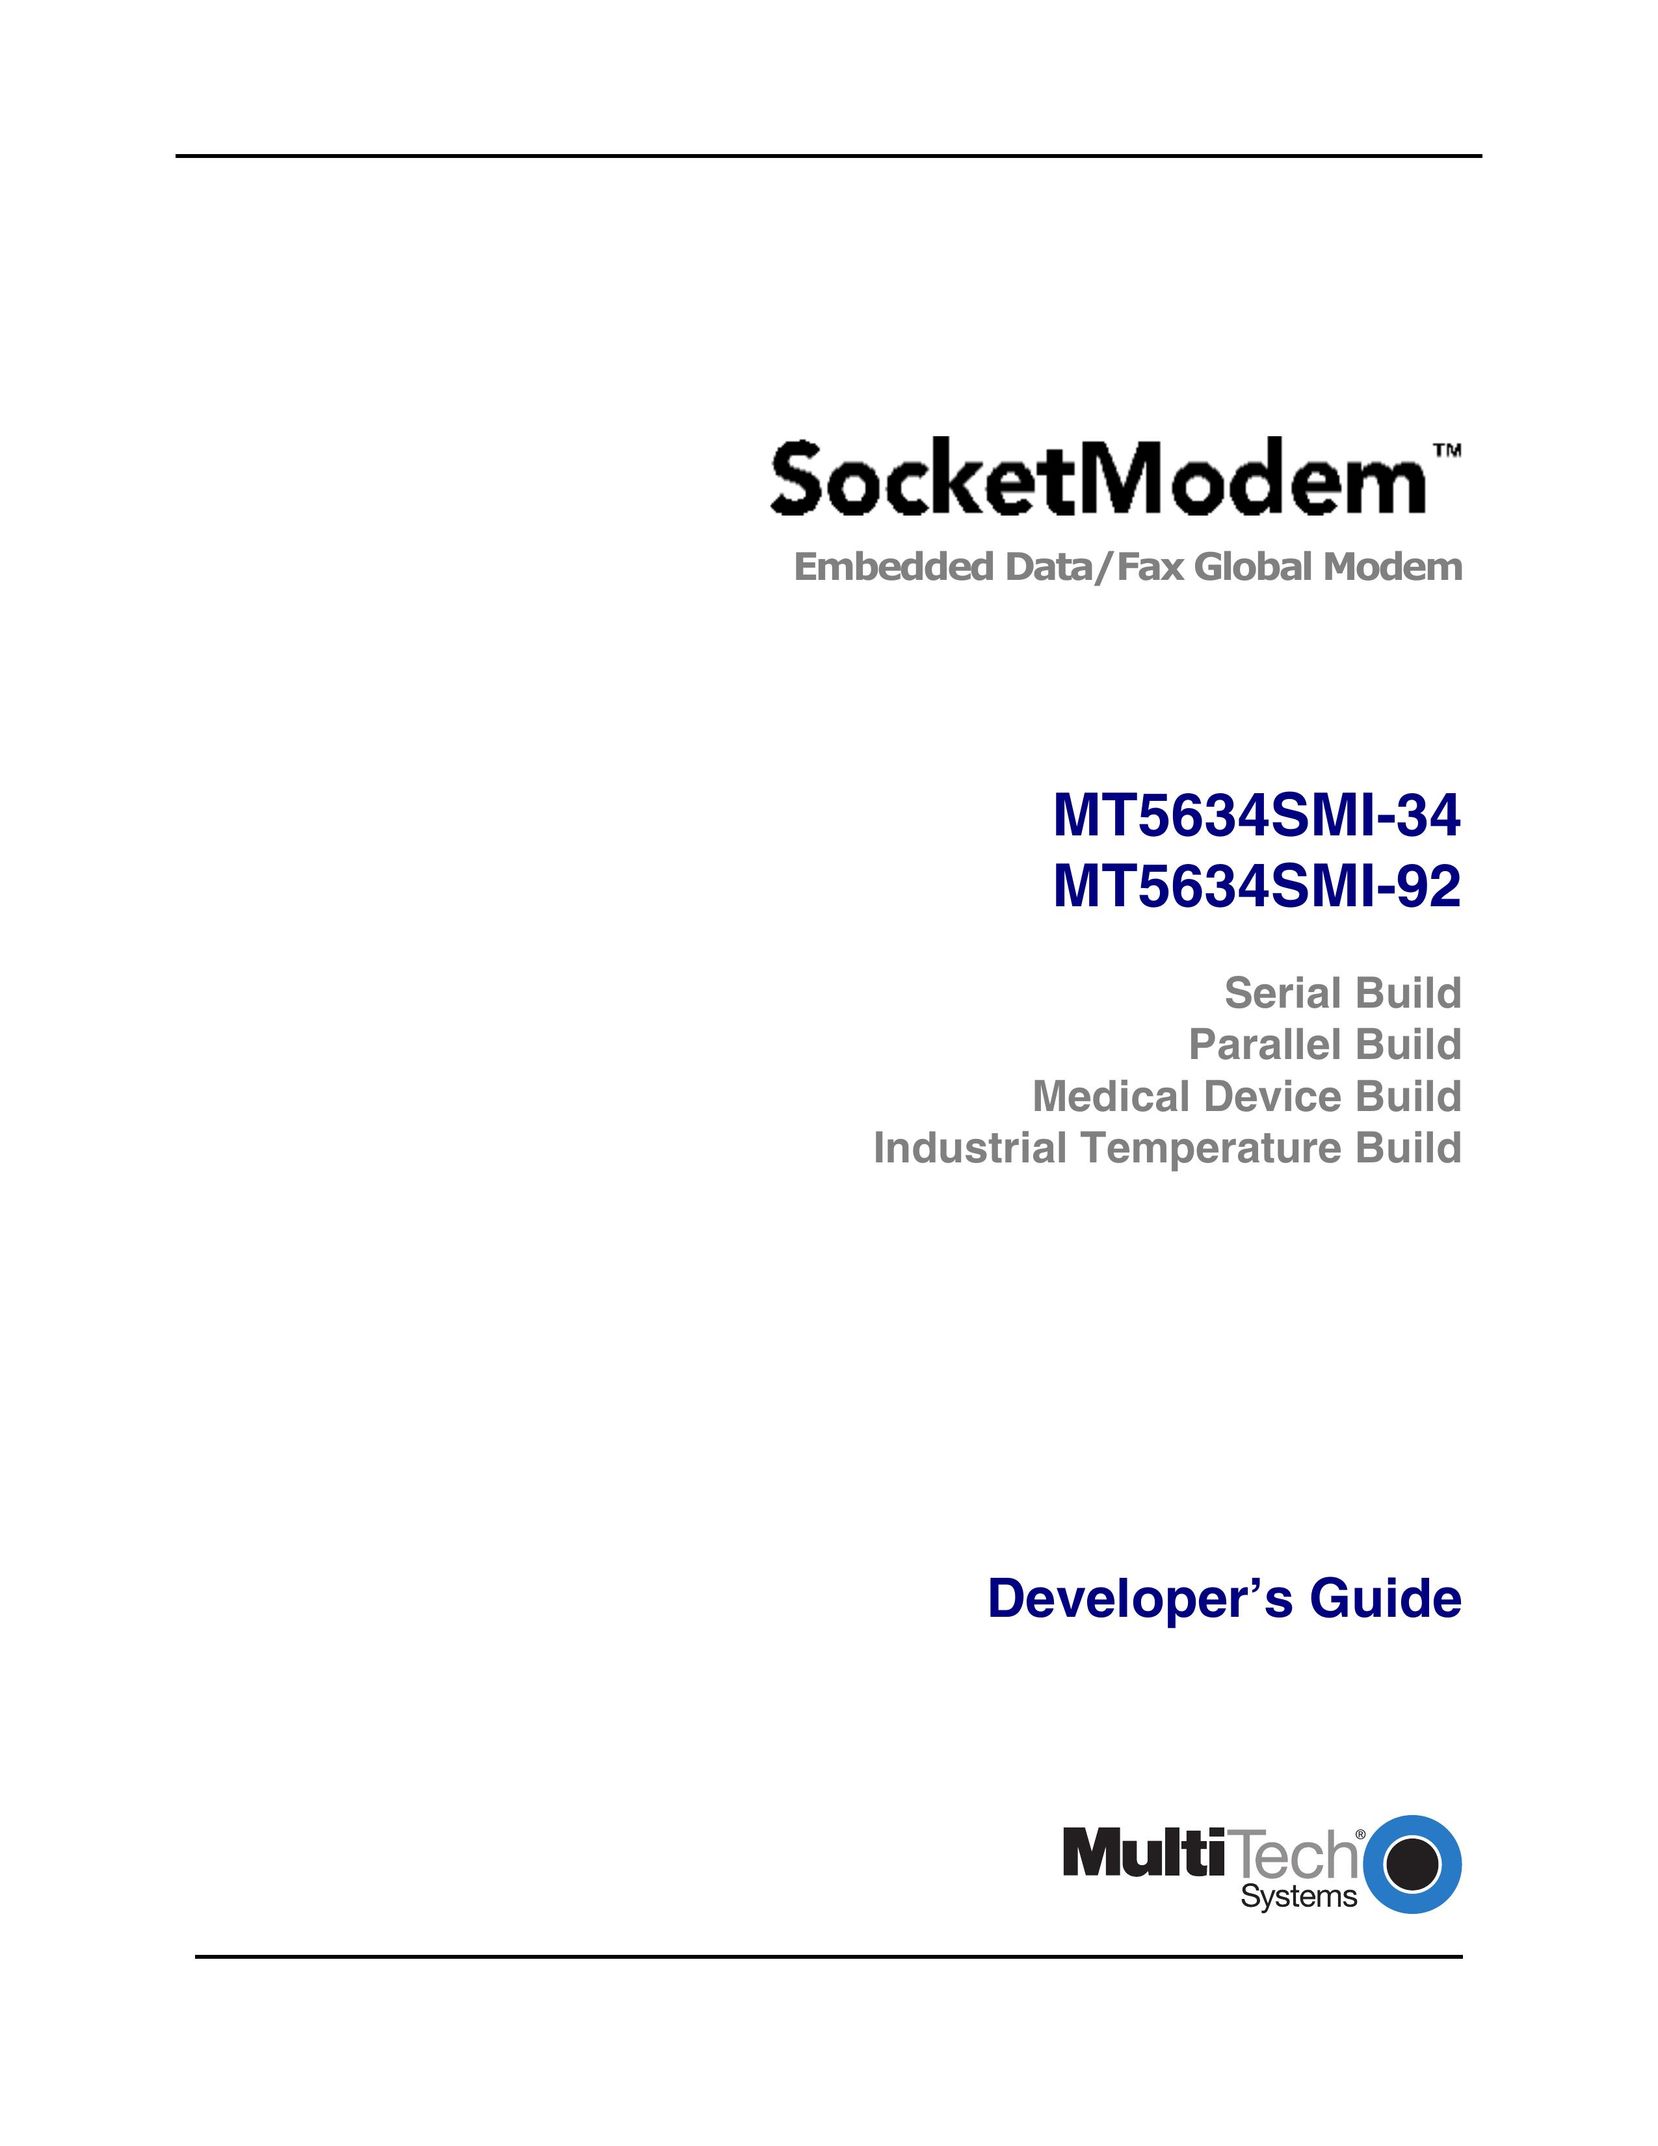 Technics MT5634SMI-92 Modem User Manual